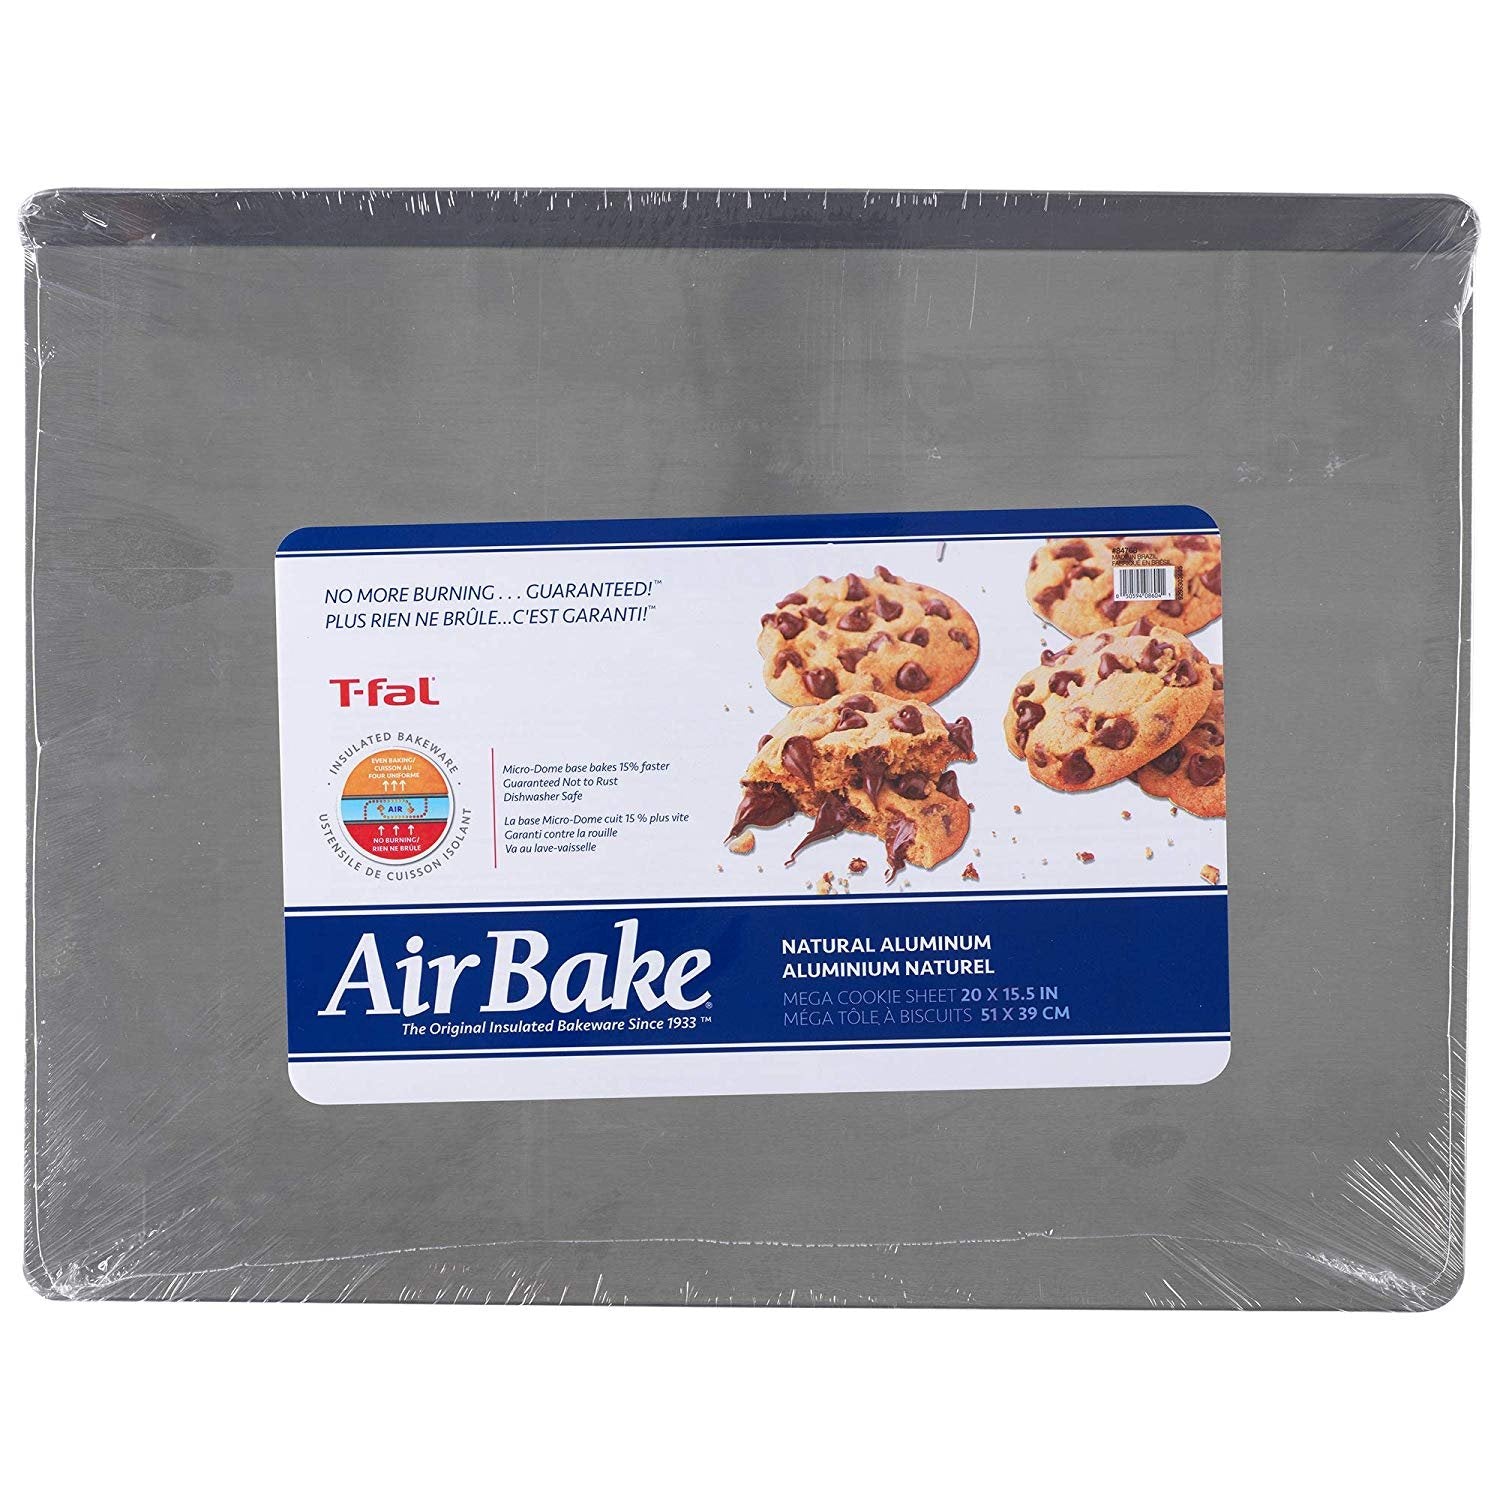  T-fal AirBake Natural Aluminum Cookie Sheet, 14 x 16